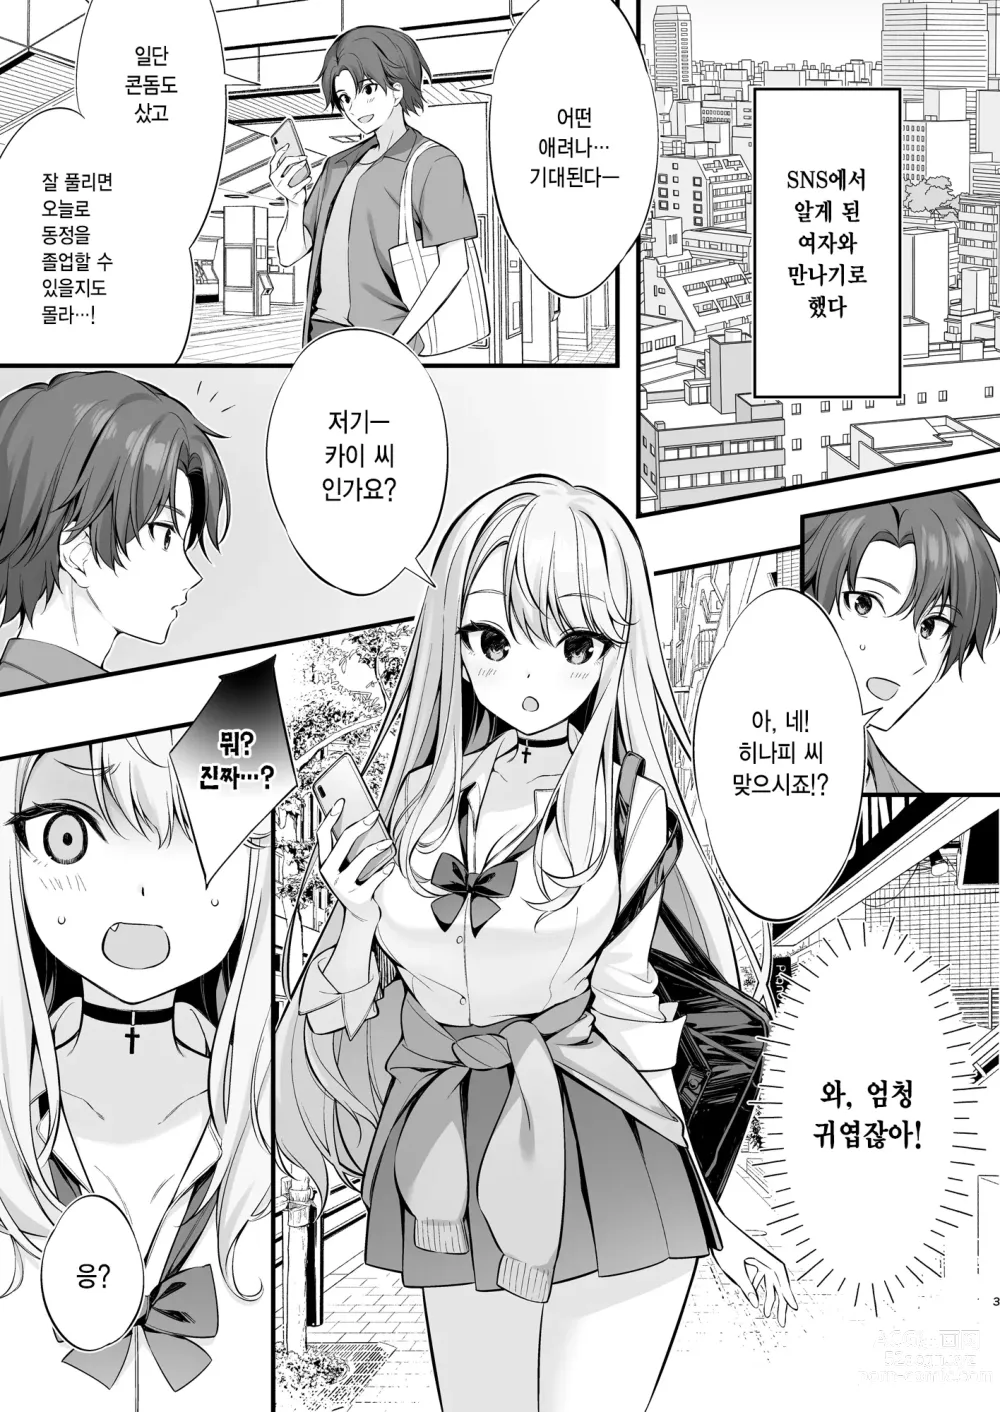 Page 2 of doujinshi SNS를 통해 만난 사람은 갸루가 된 여동생이었다